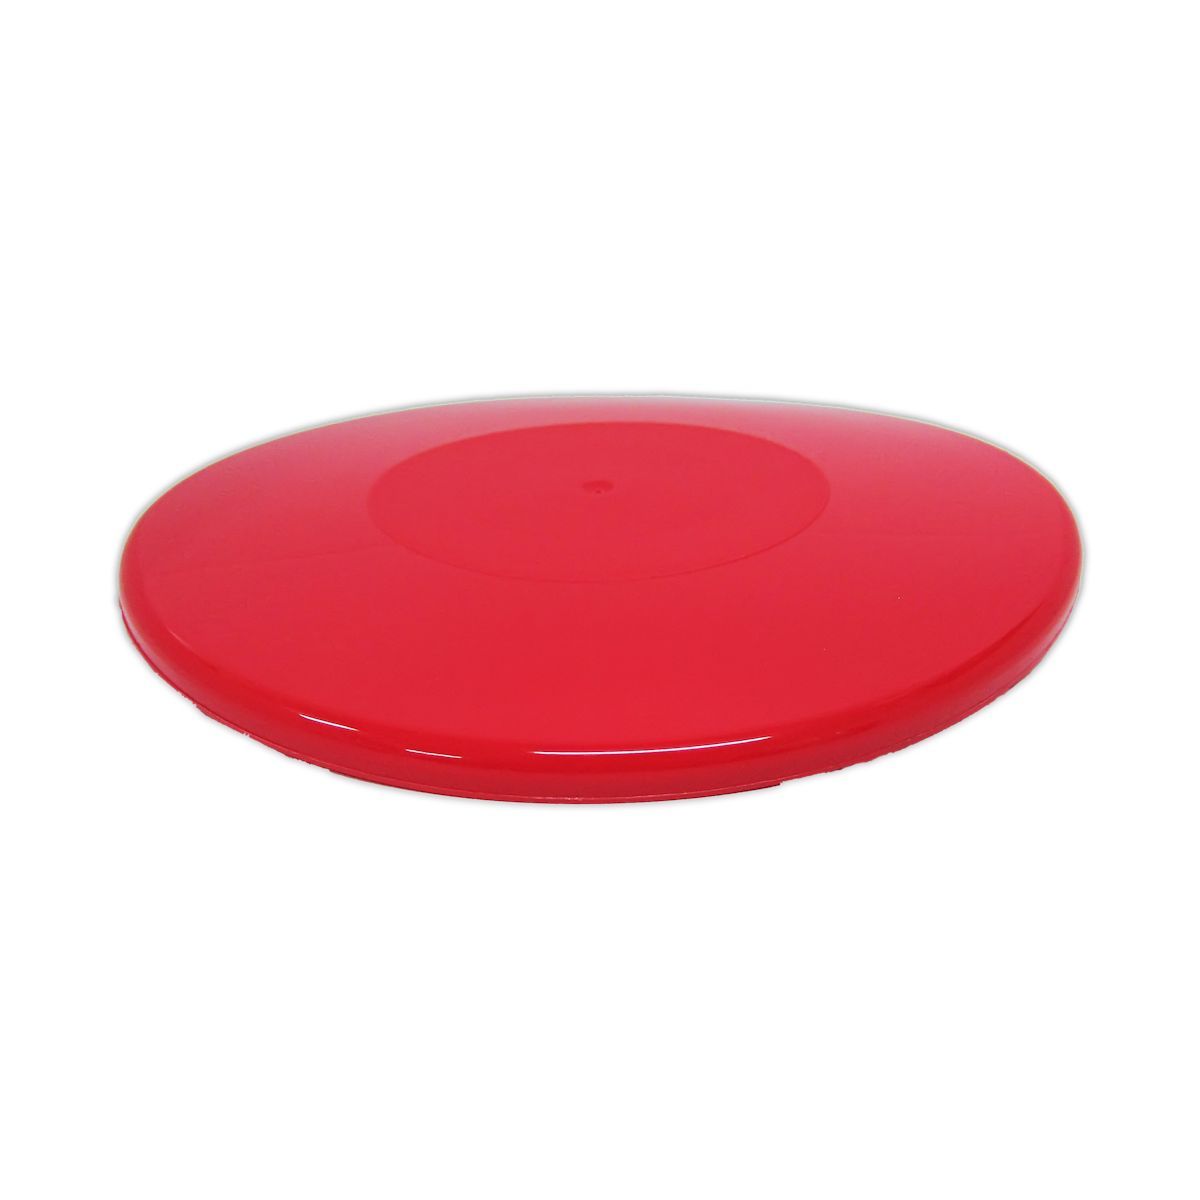 PUDB1225L - 1/2lb Red Pudding Bowl Lids x 25